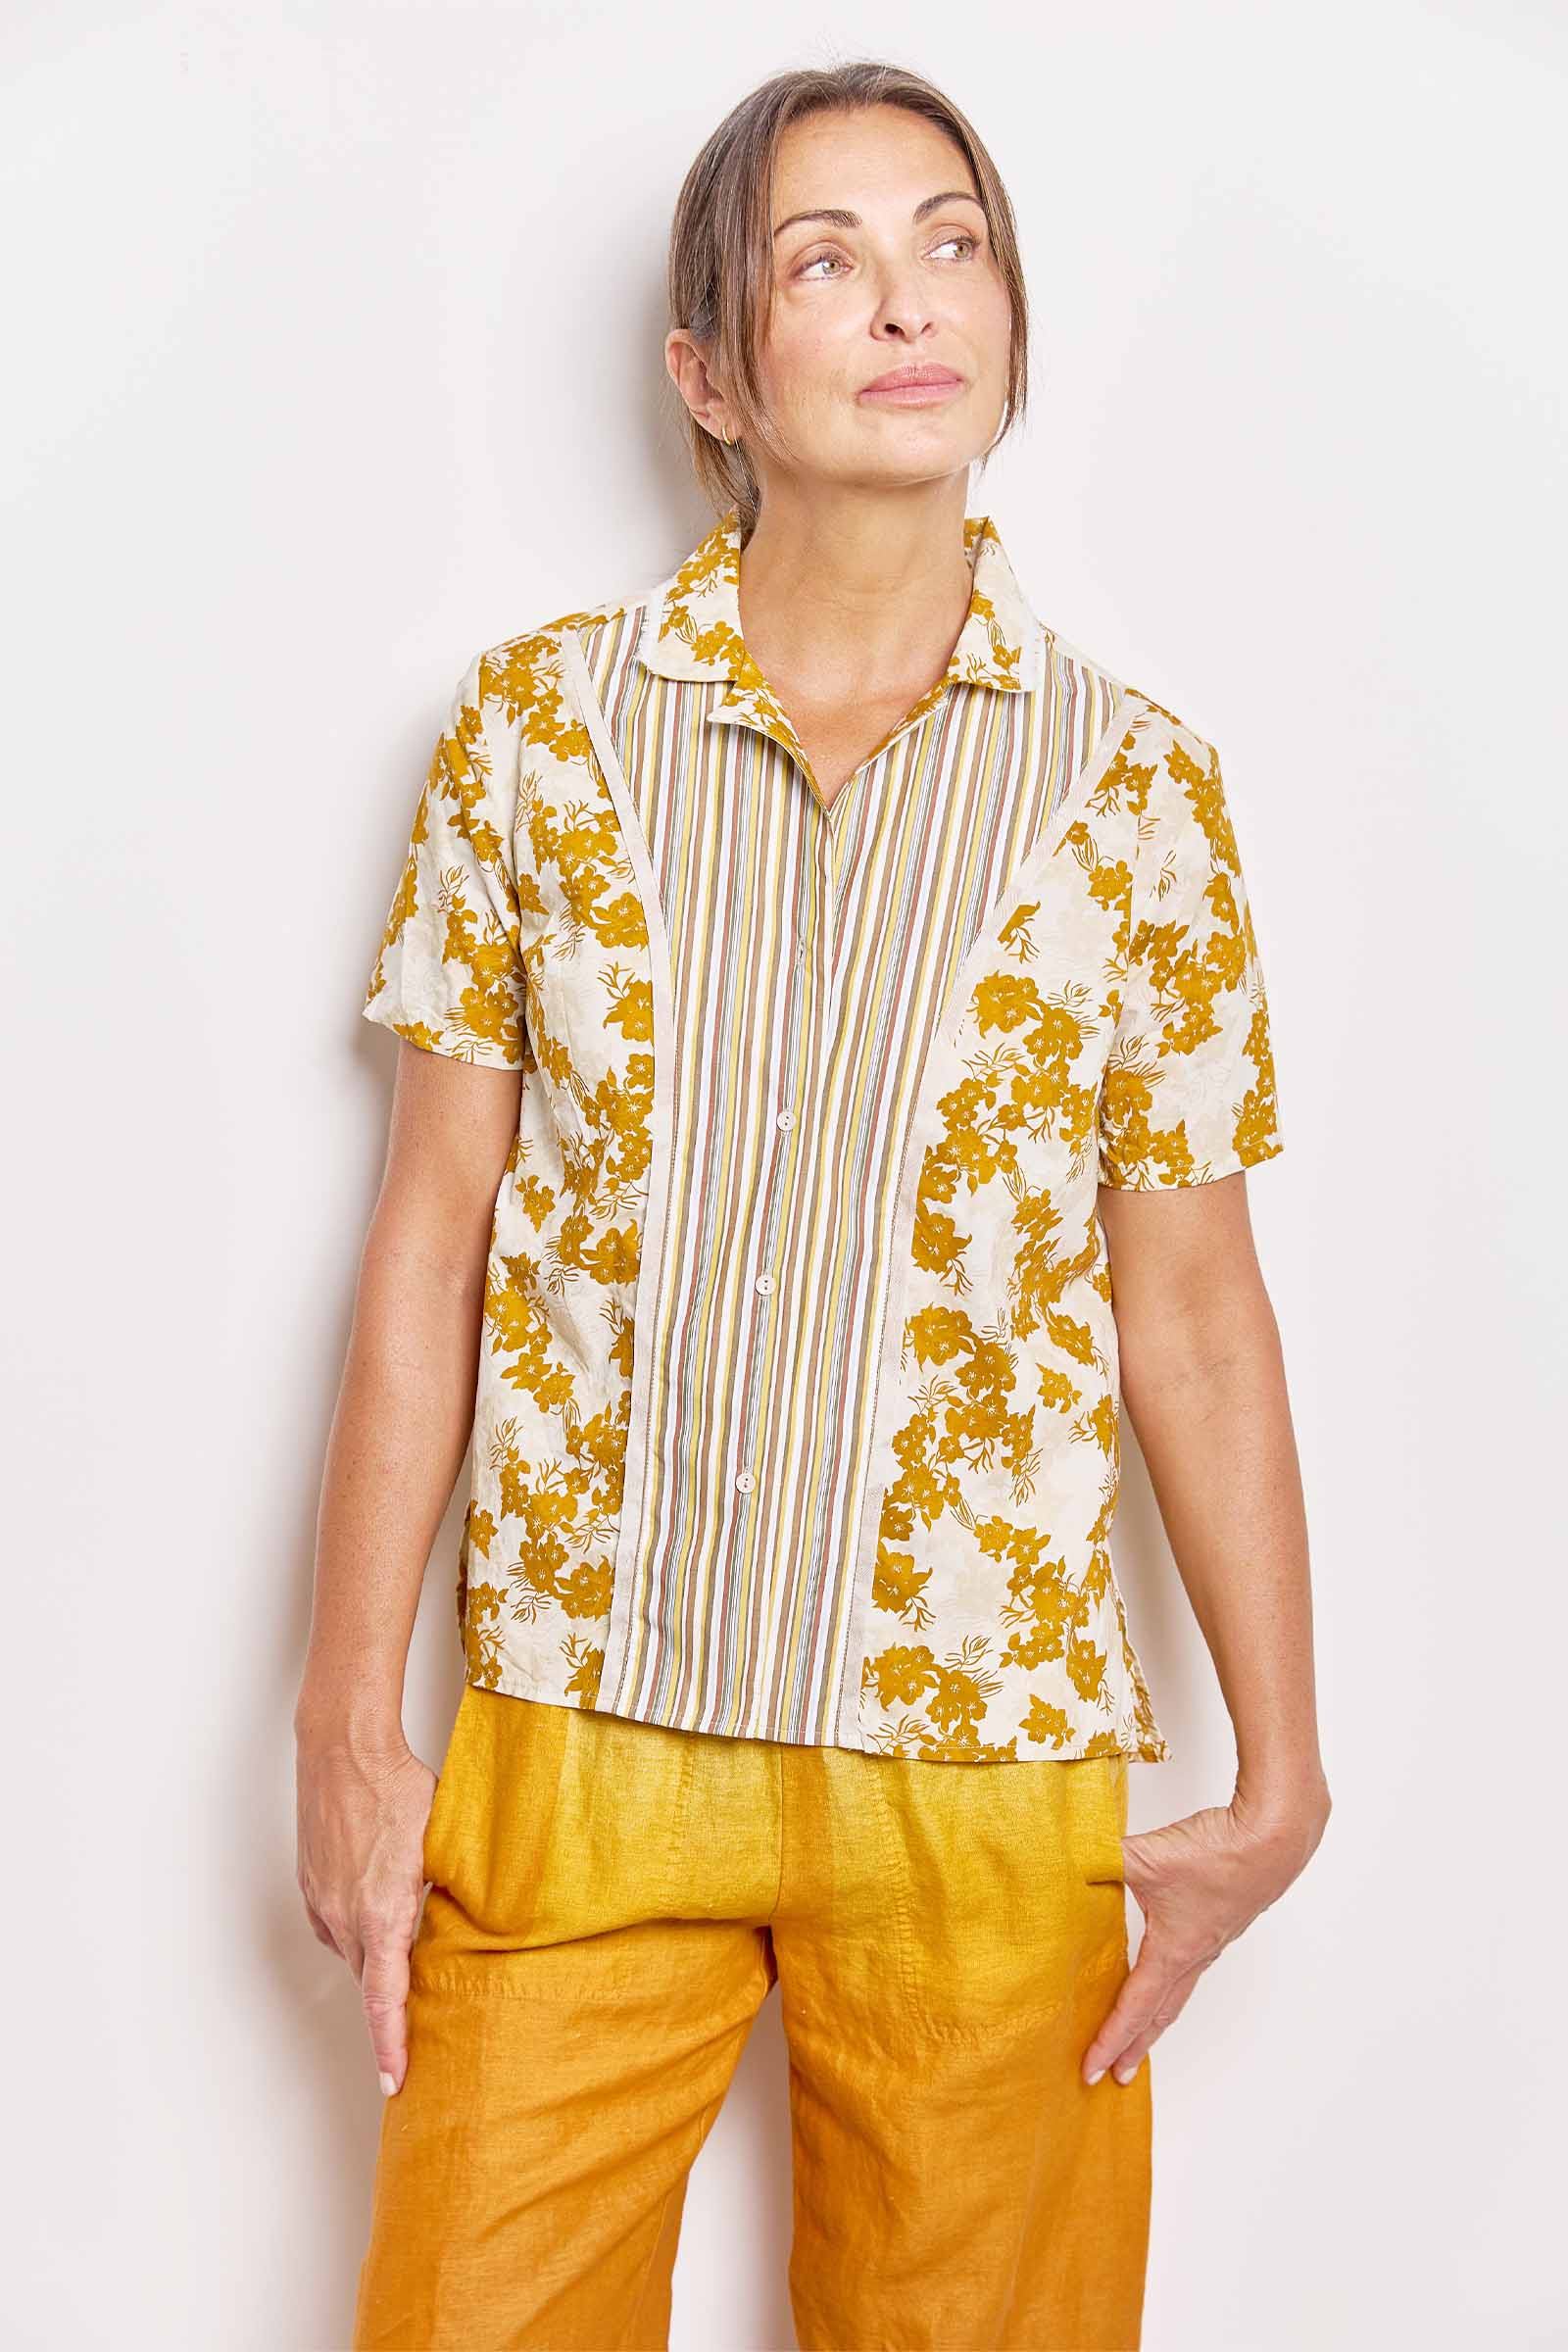 teddy ochre floral cotton shirt.